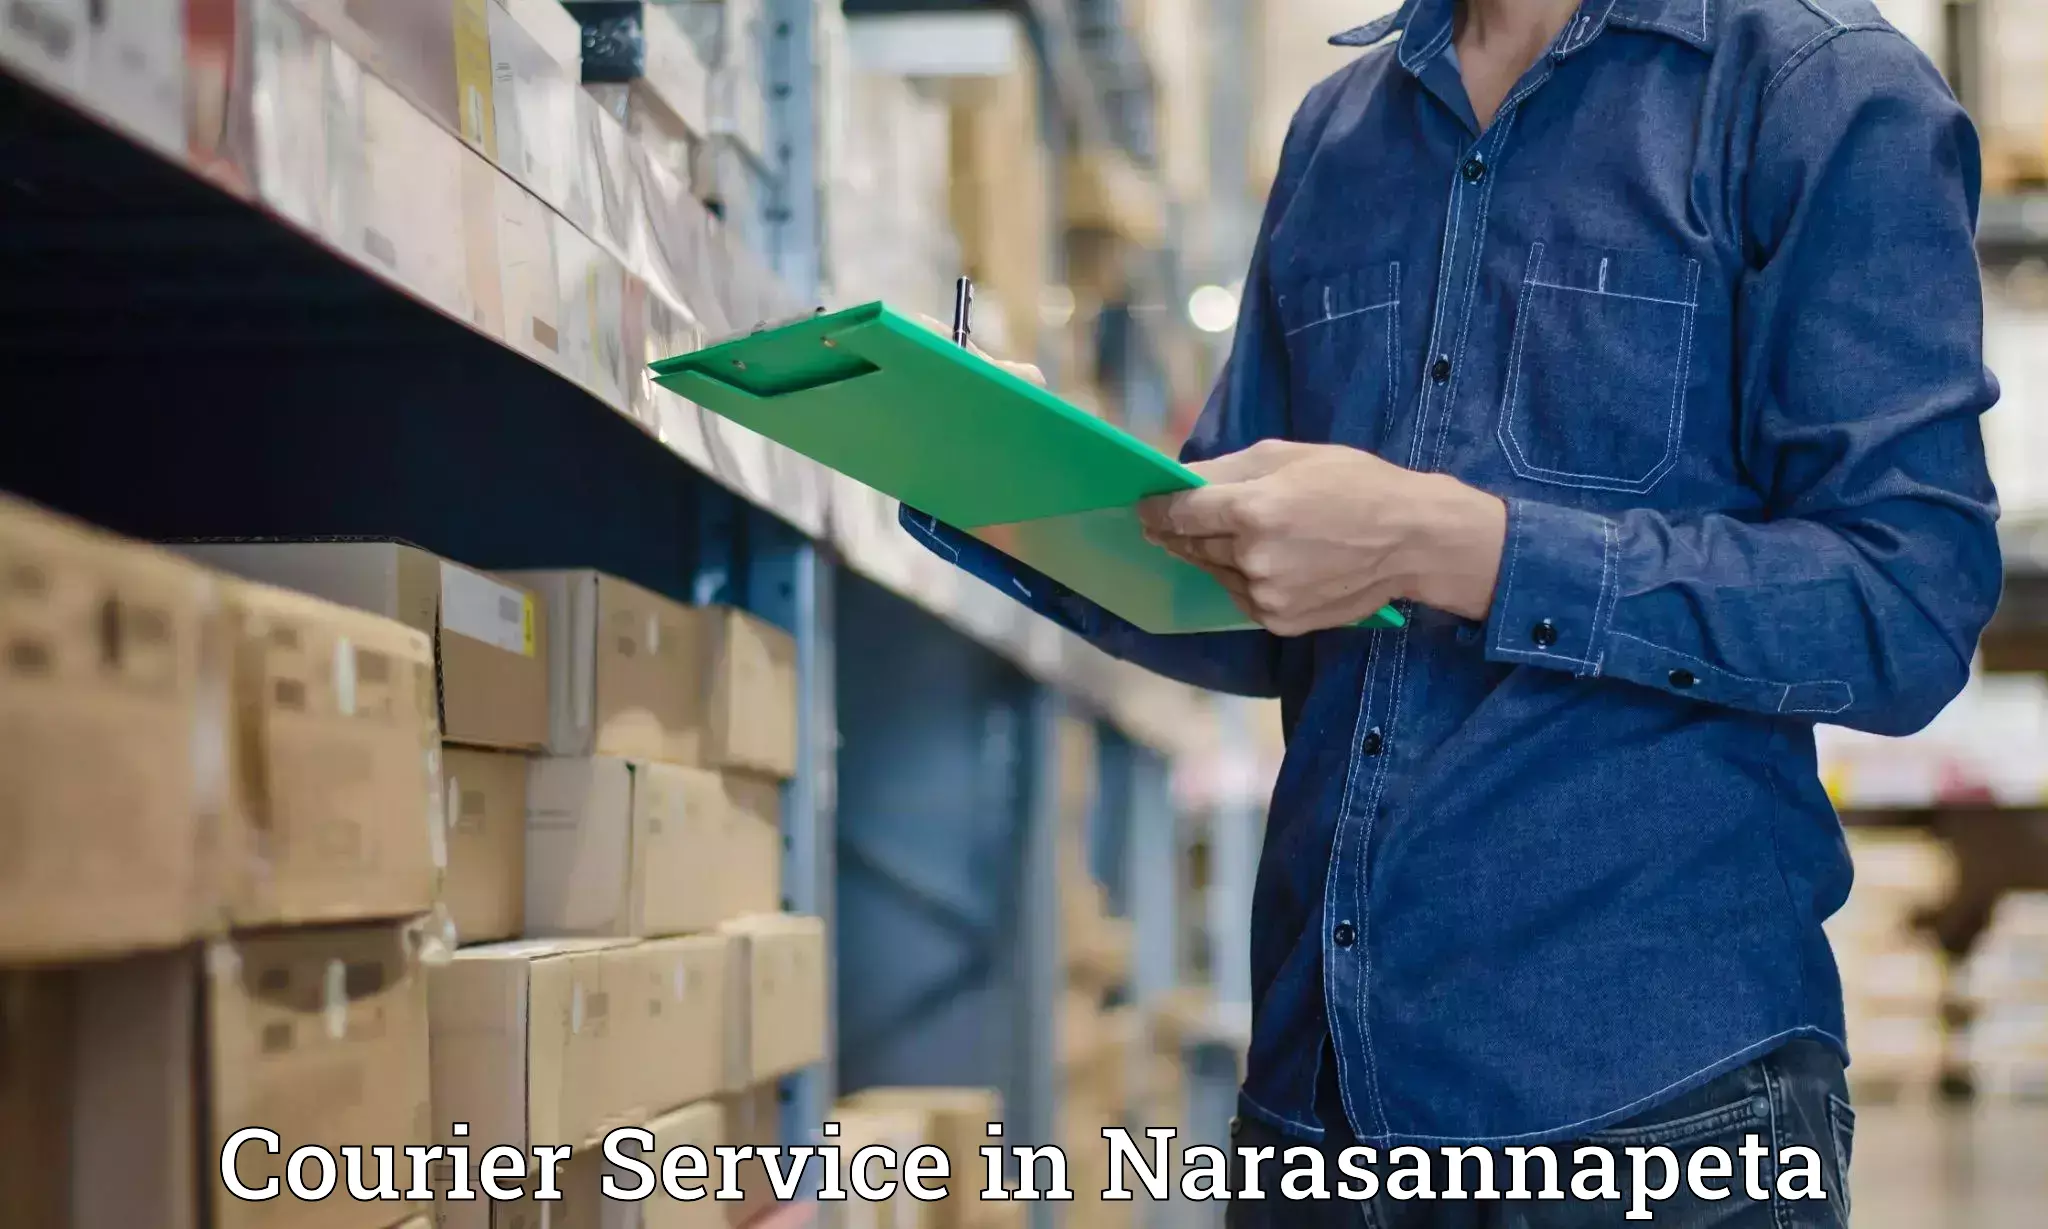 Reliable shipping partners in Narasannapeta